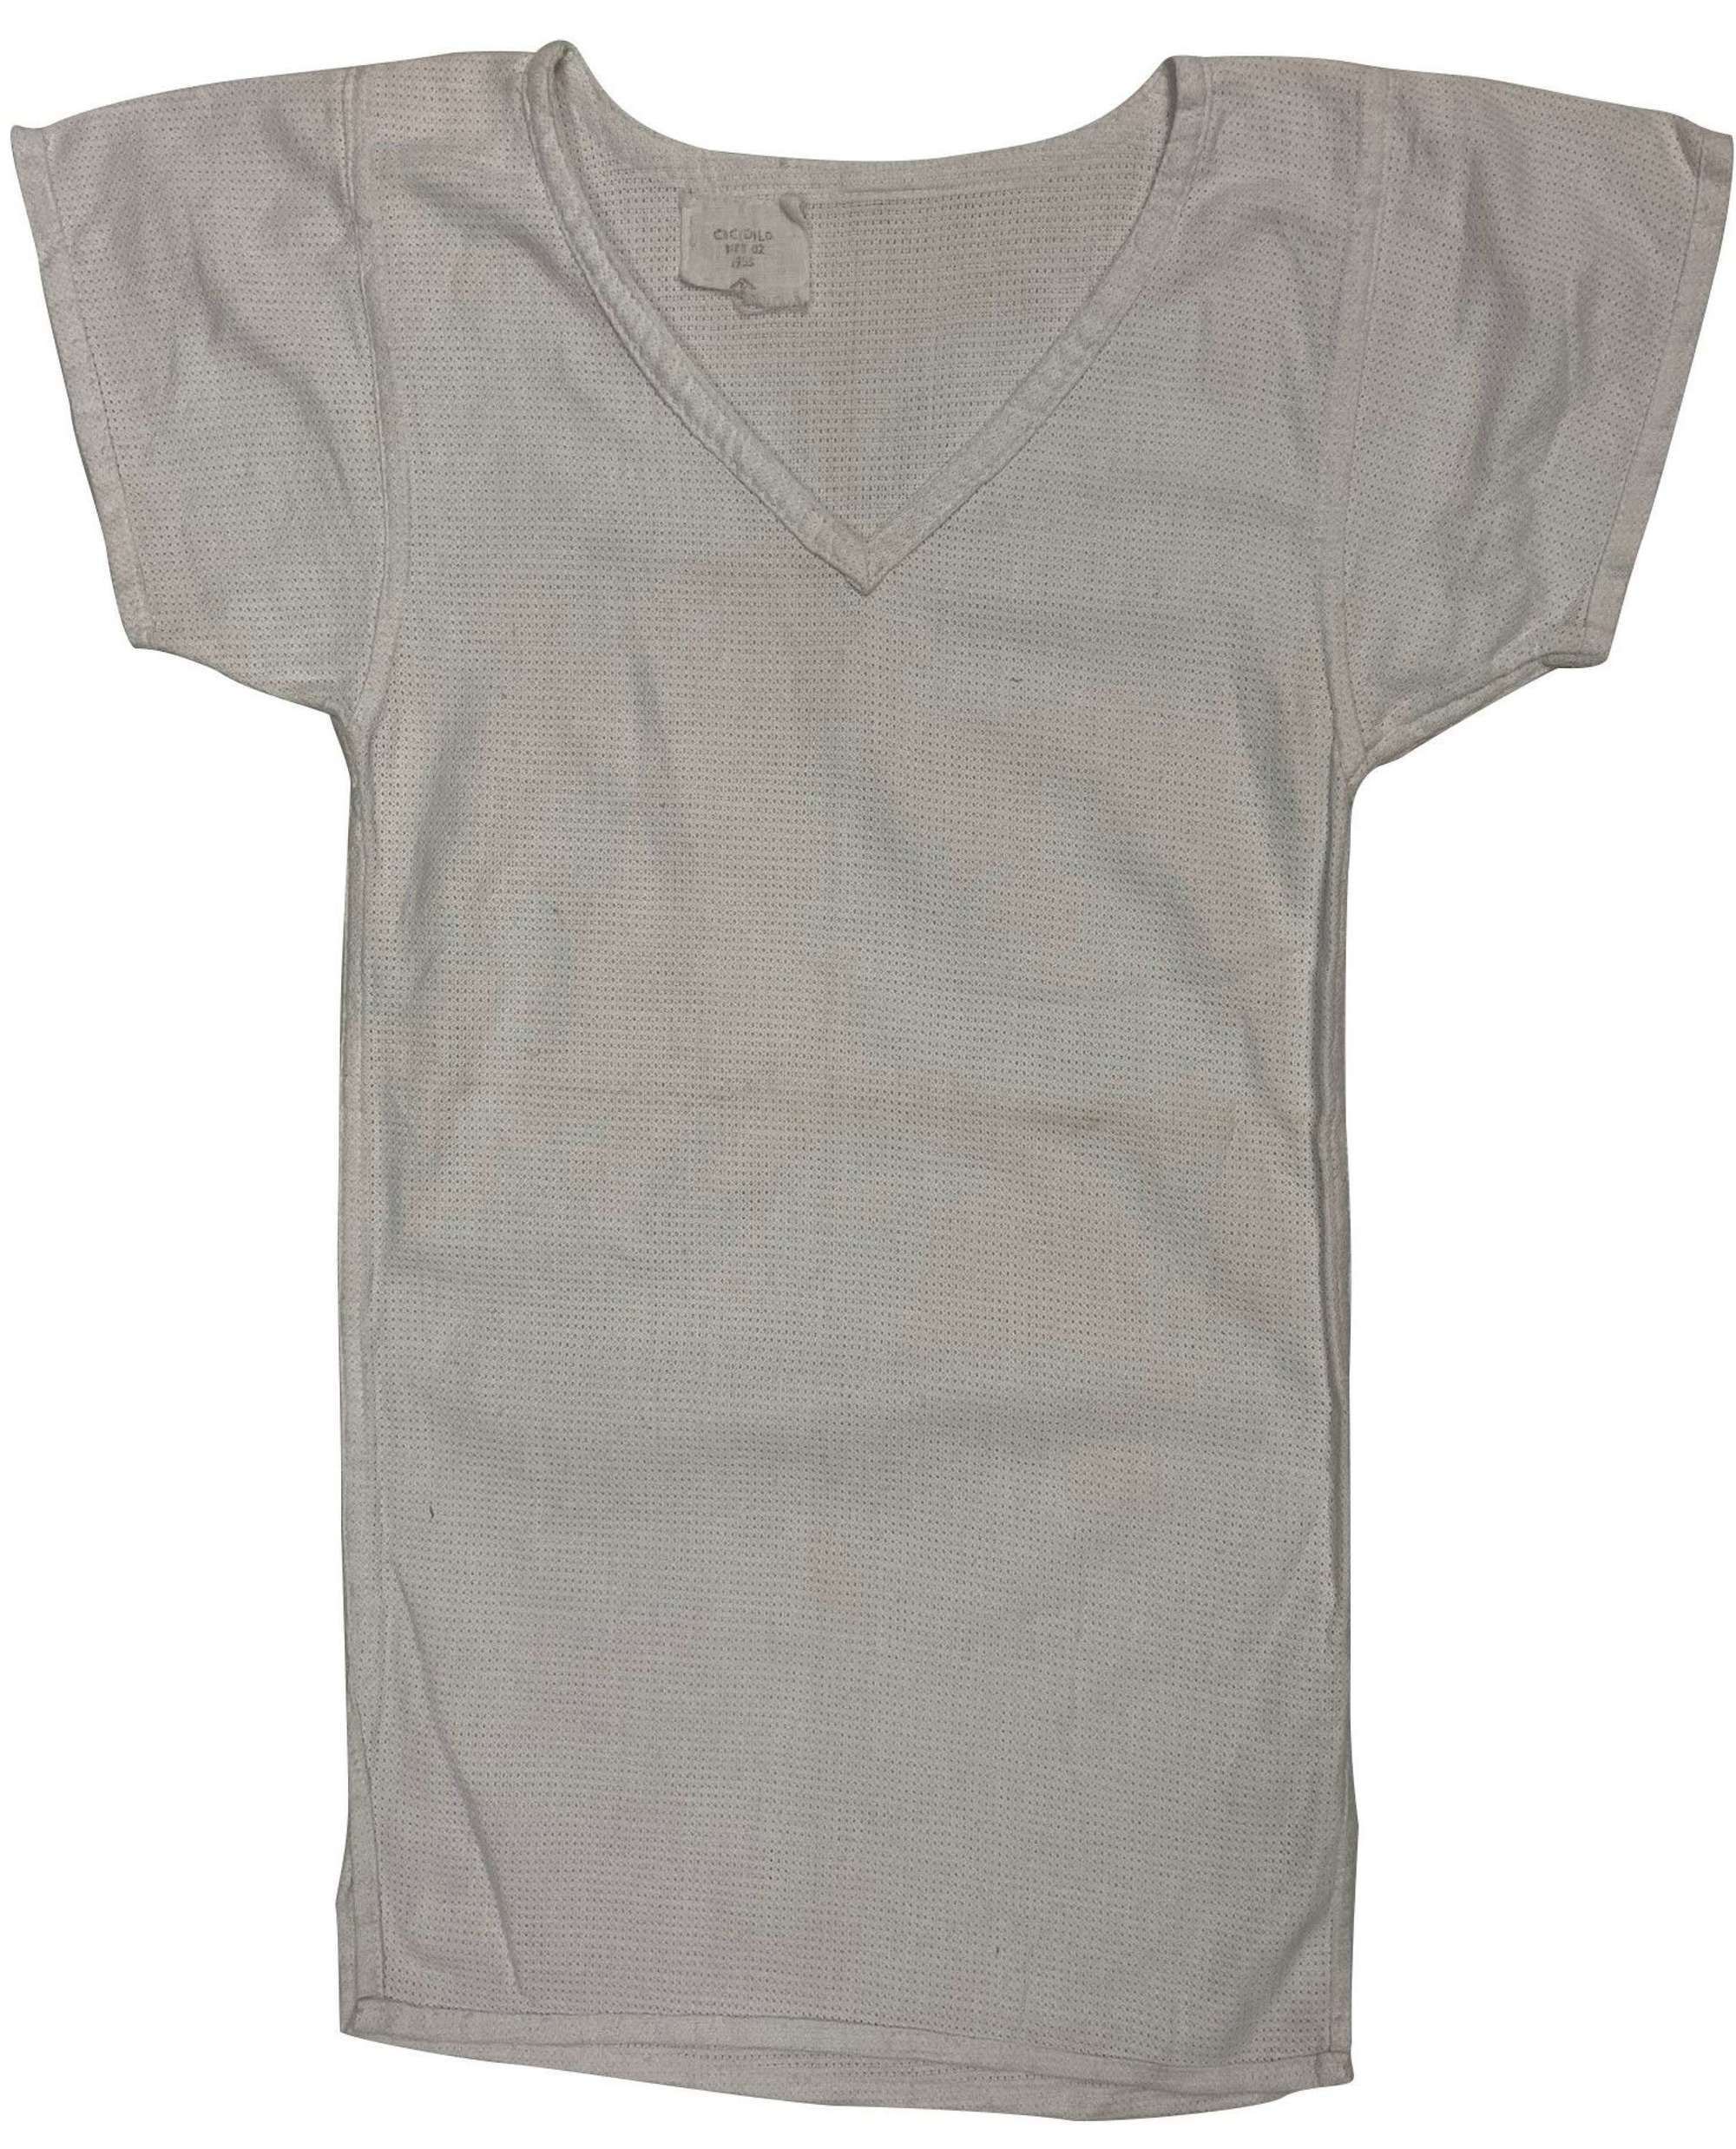 Original 1953 Dated British Army Aertex V-Neck Shirt - Size 002